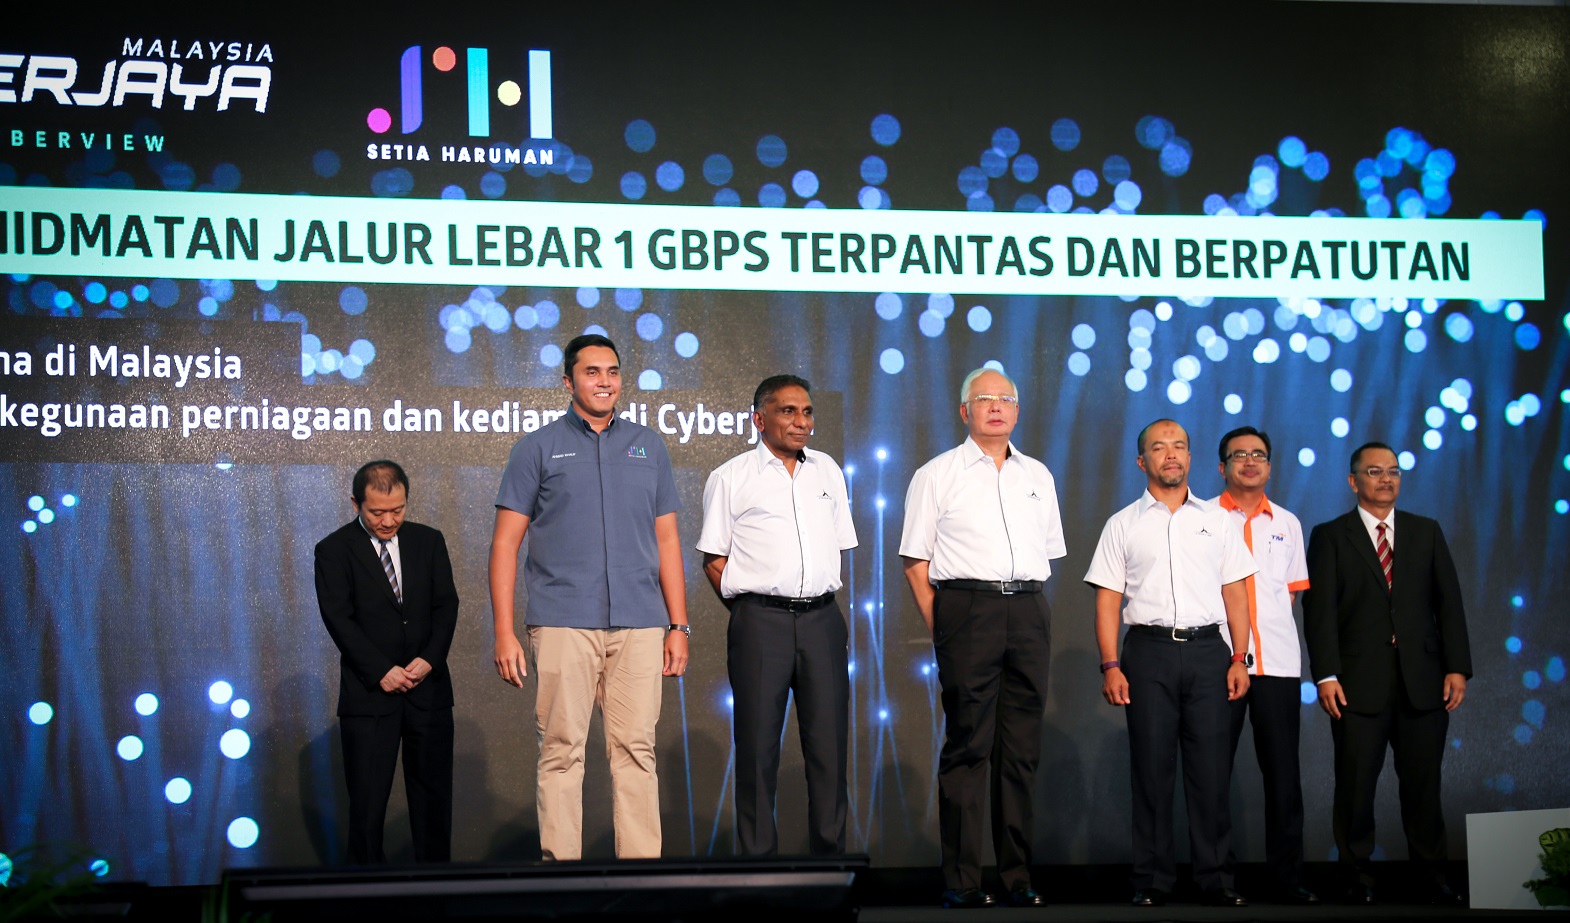 Cyberjaya launches Malaysia’s first superfast, competitive broadband